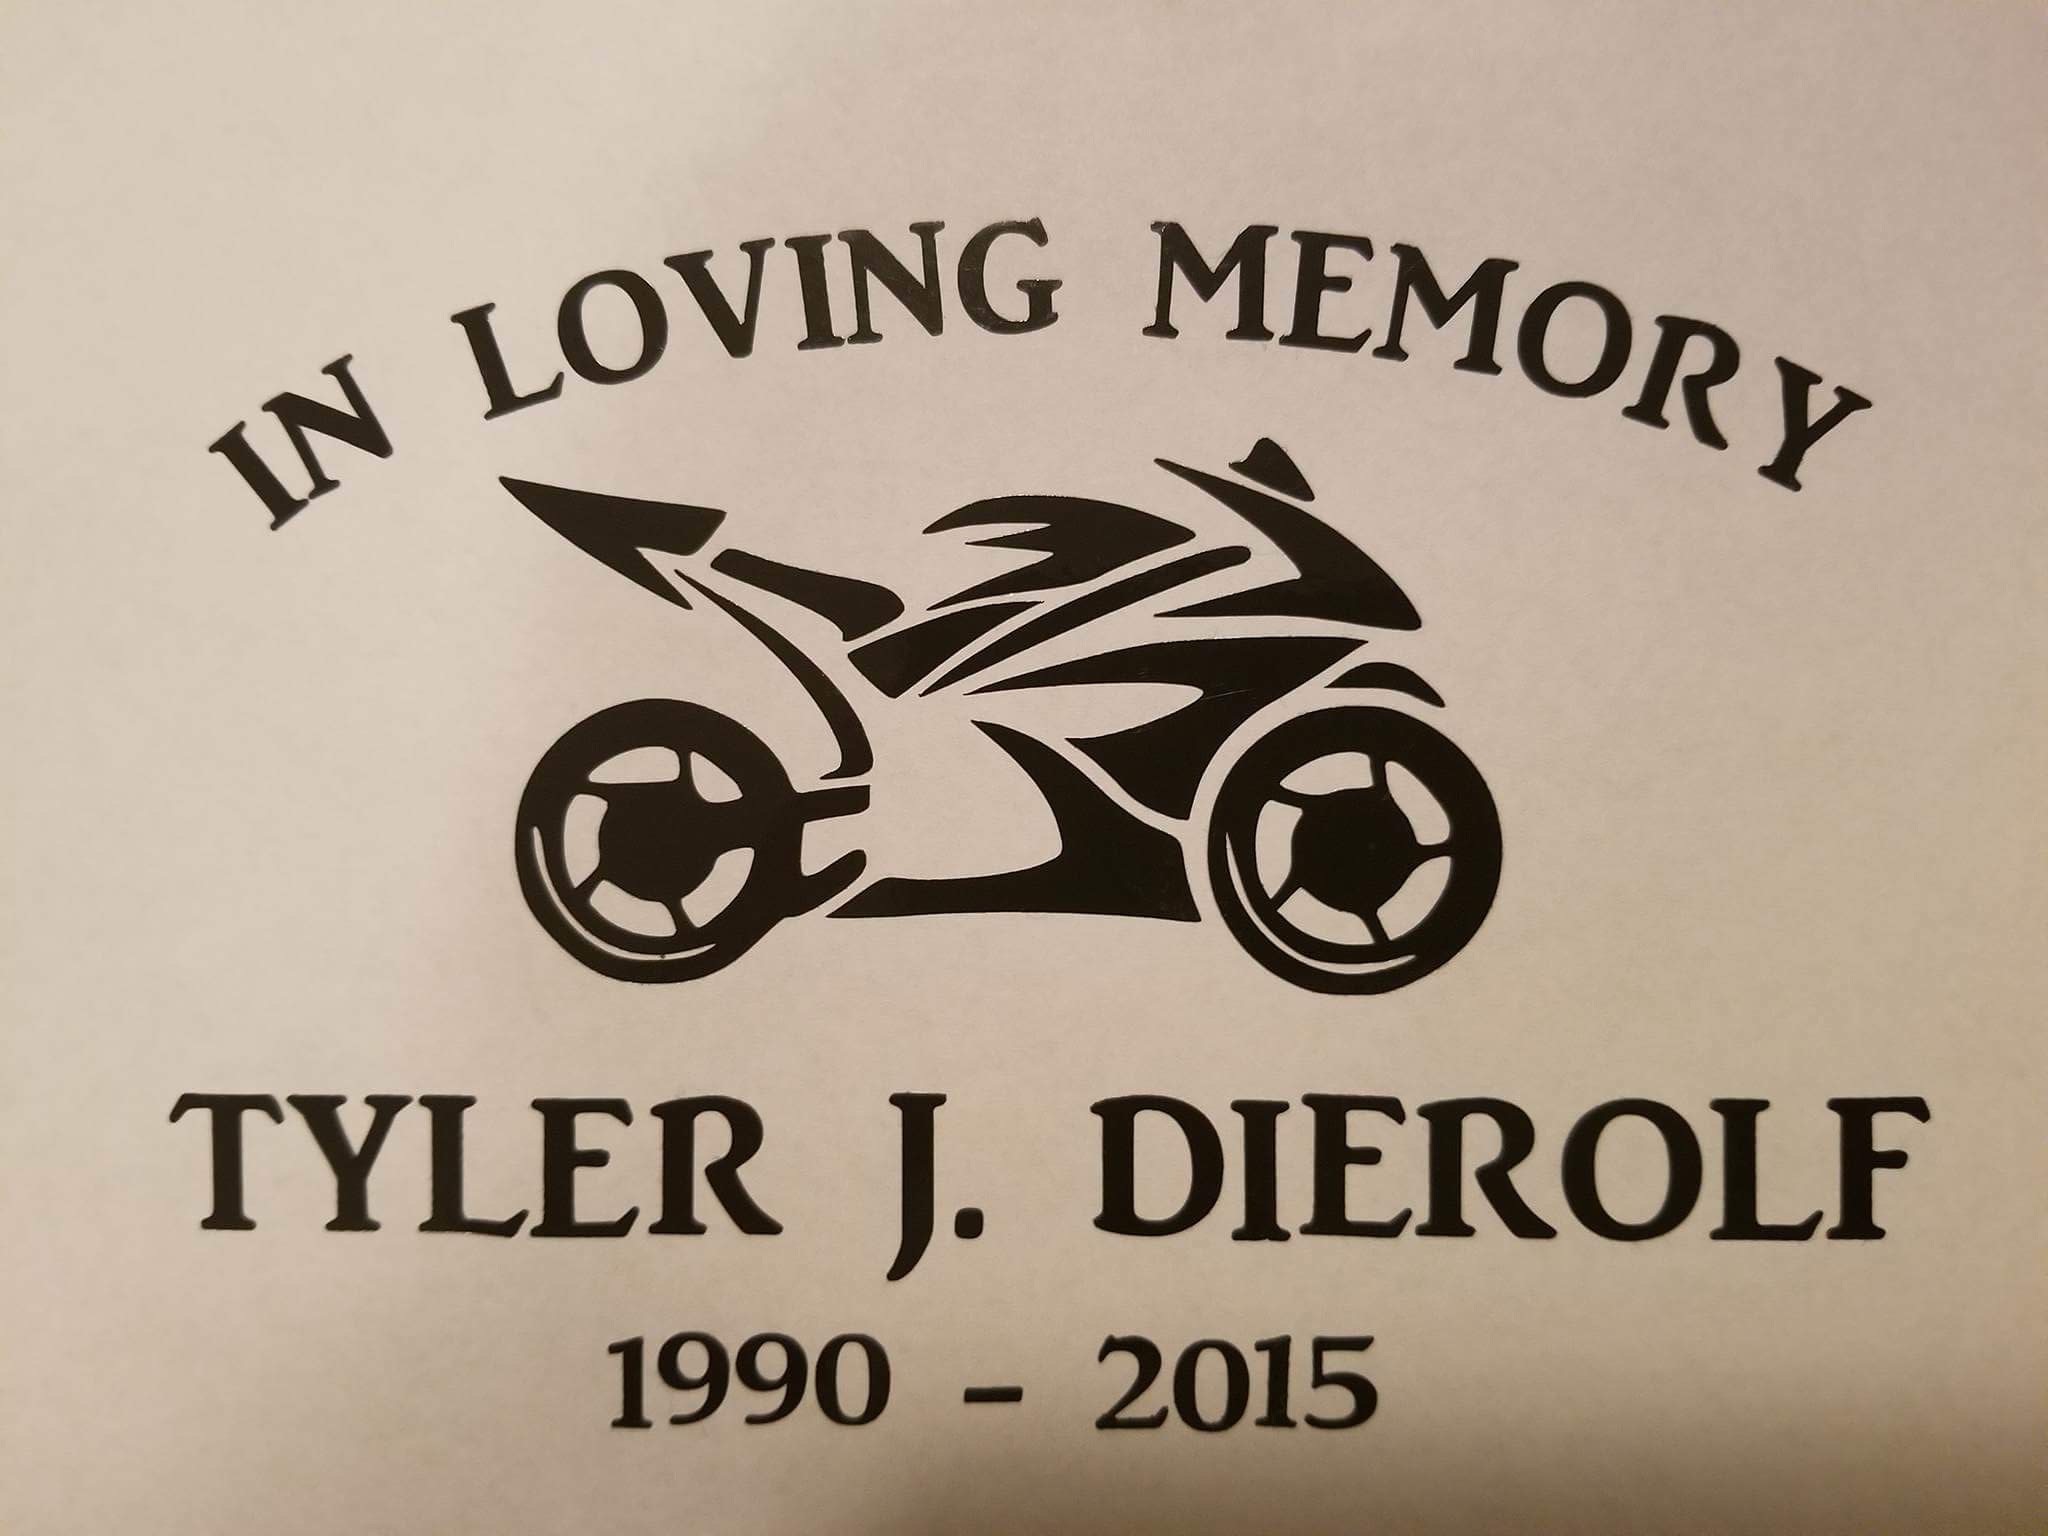 Motorcycle In Loving Memory Of 7 Memorial decal Sticker